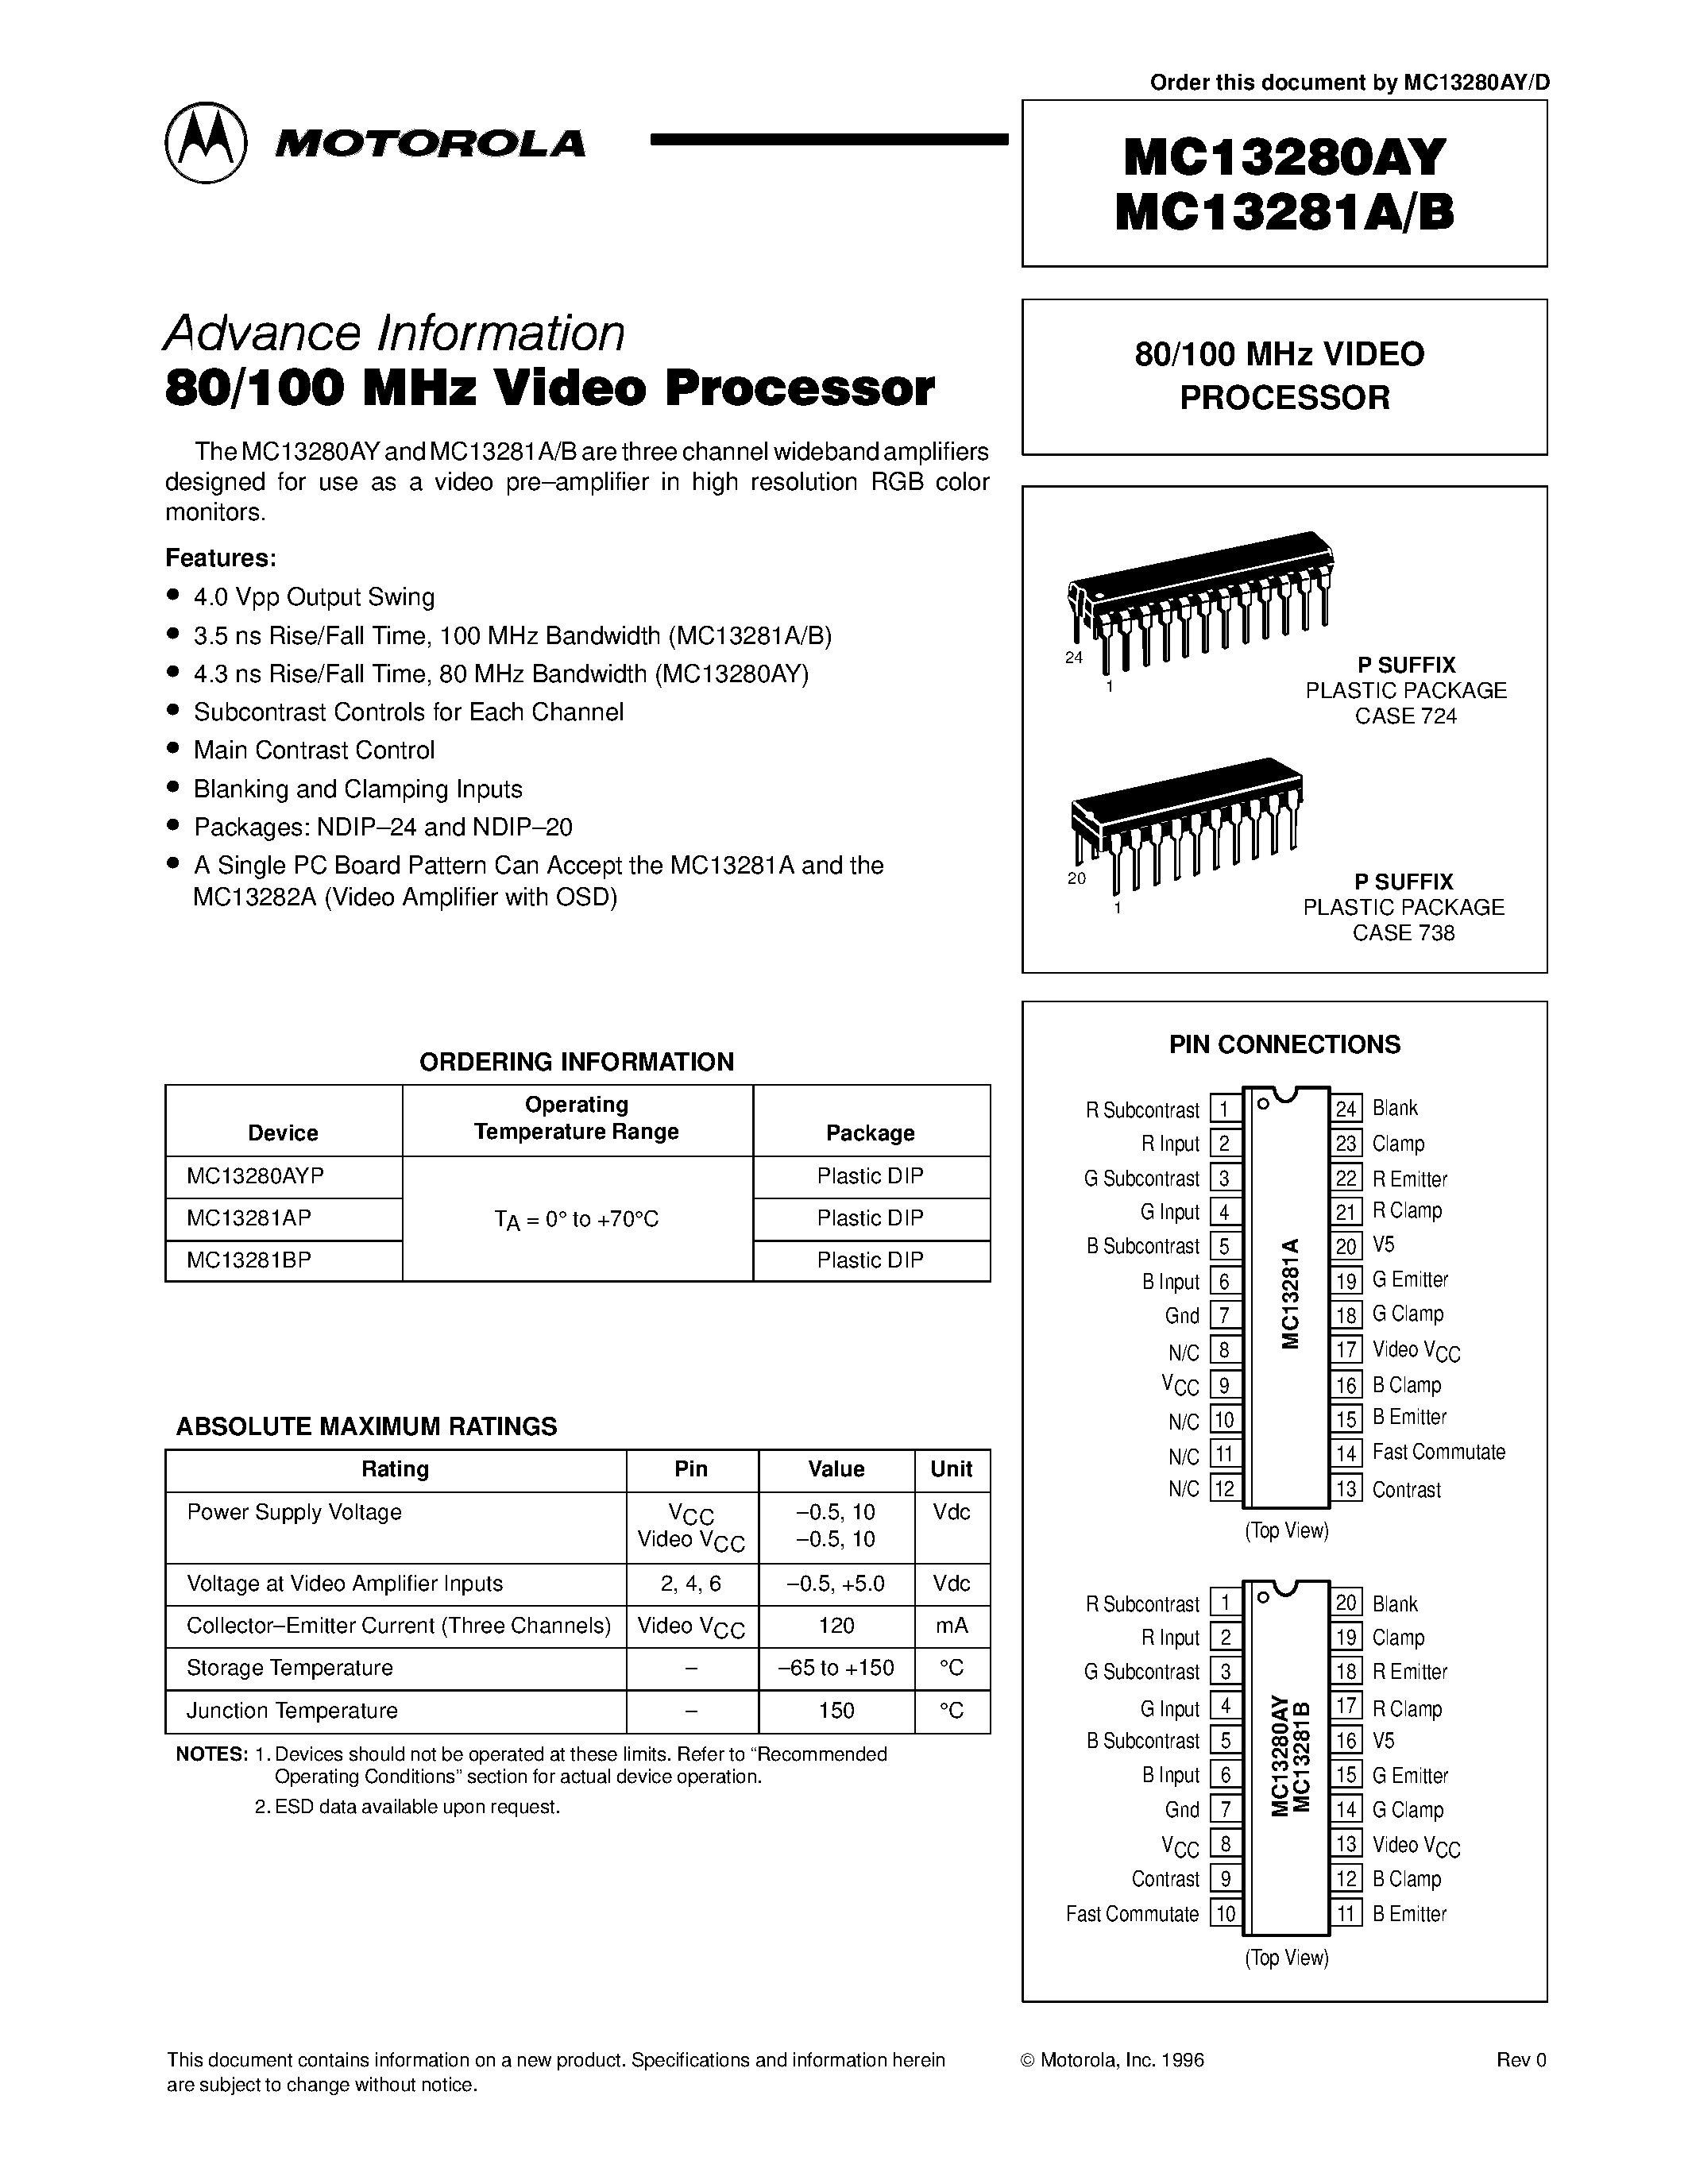 Даташит MC13281BP - 80/100 MHz VIDEO PROCESSOR страница 1